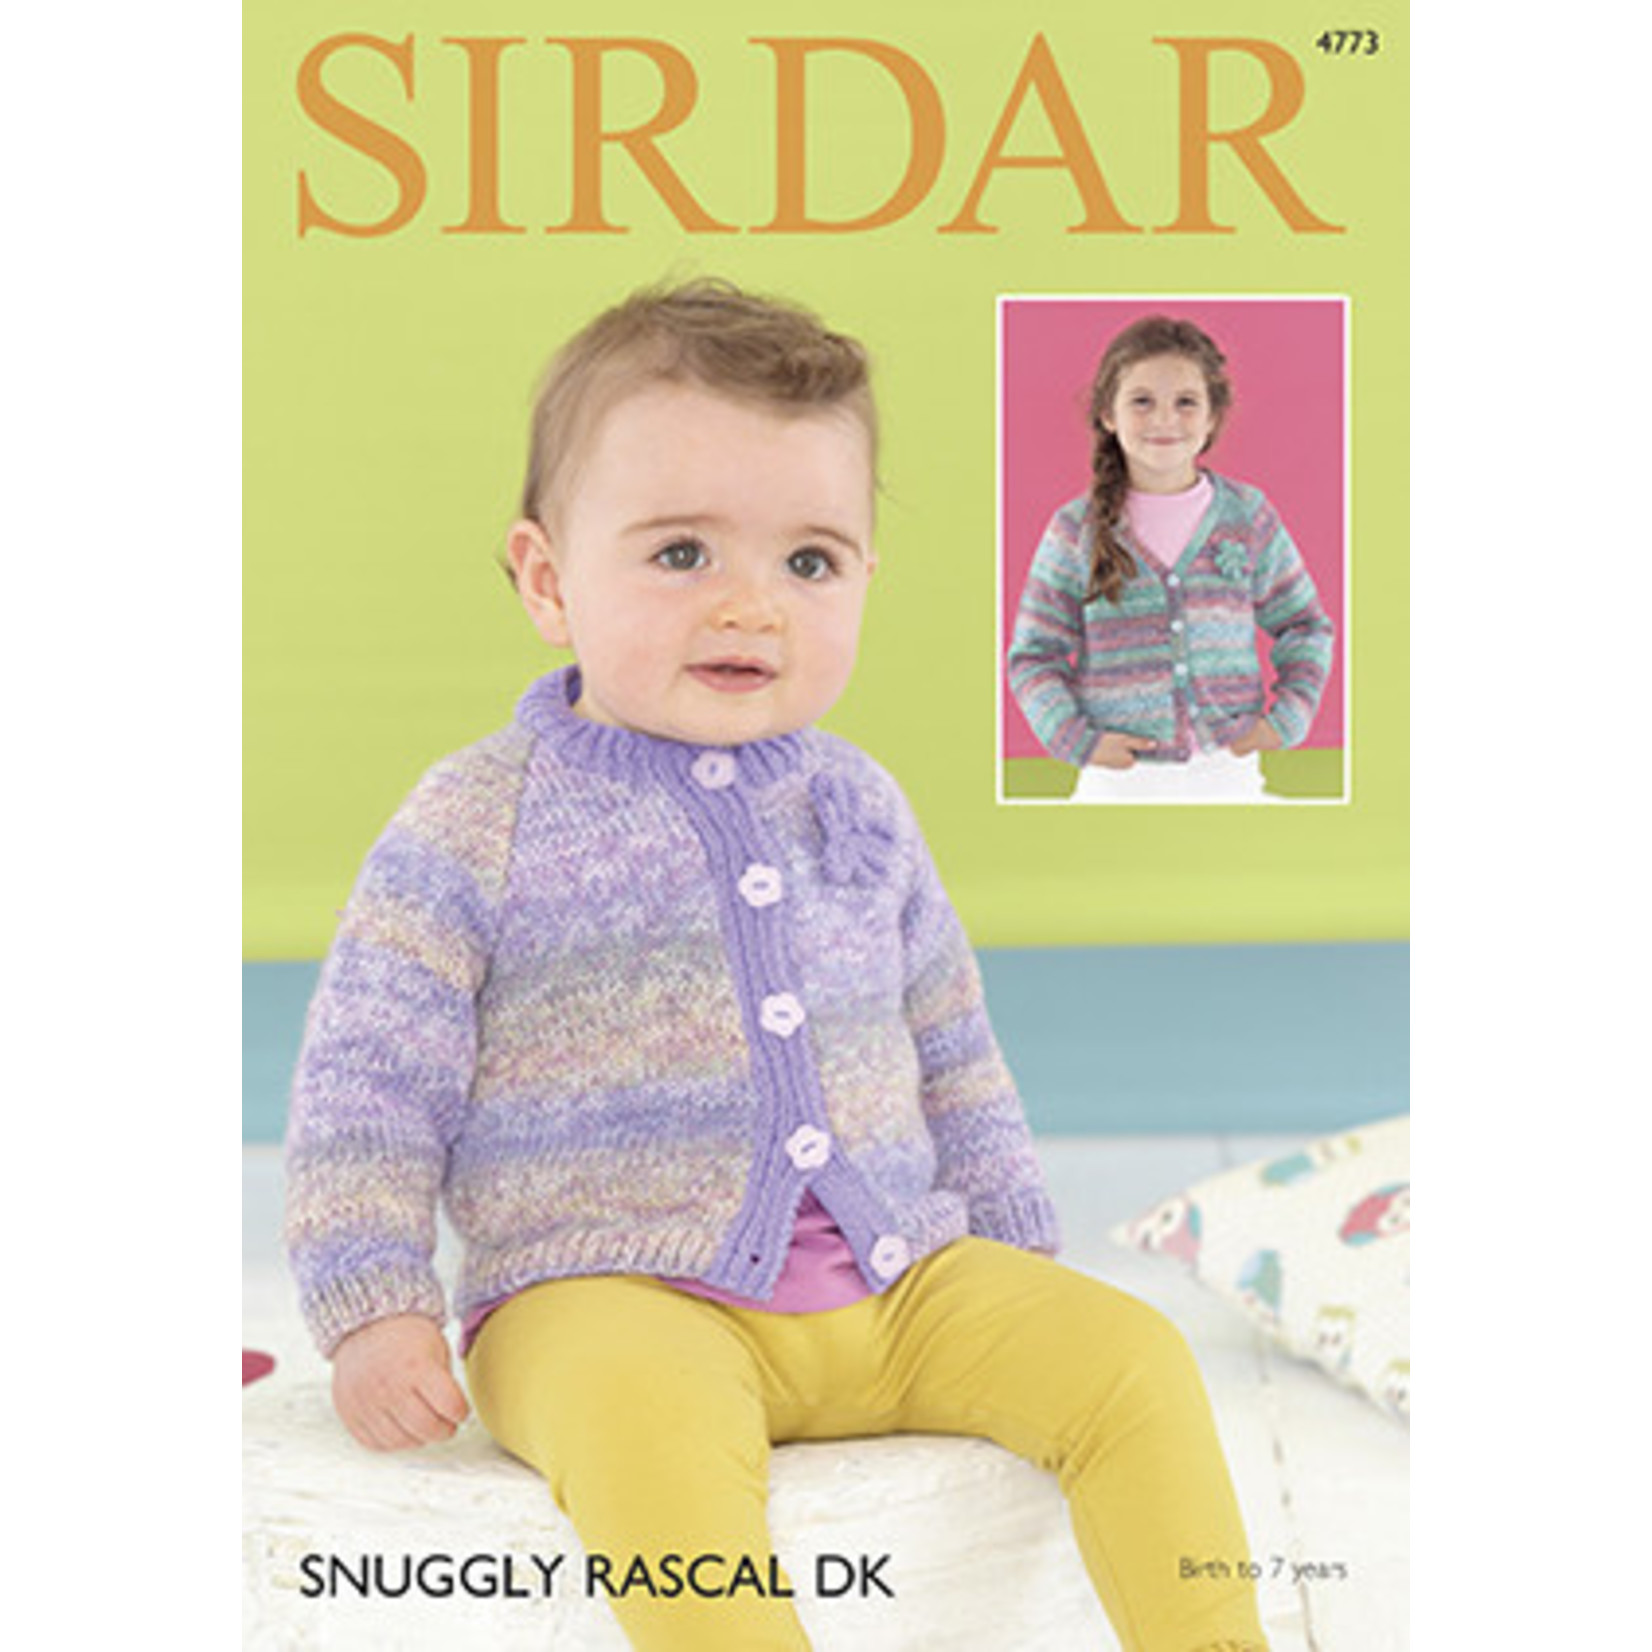 Sirdar Booklet